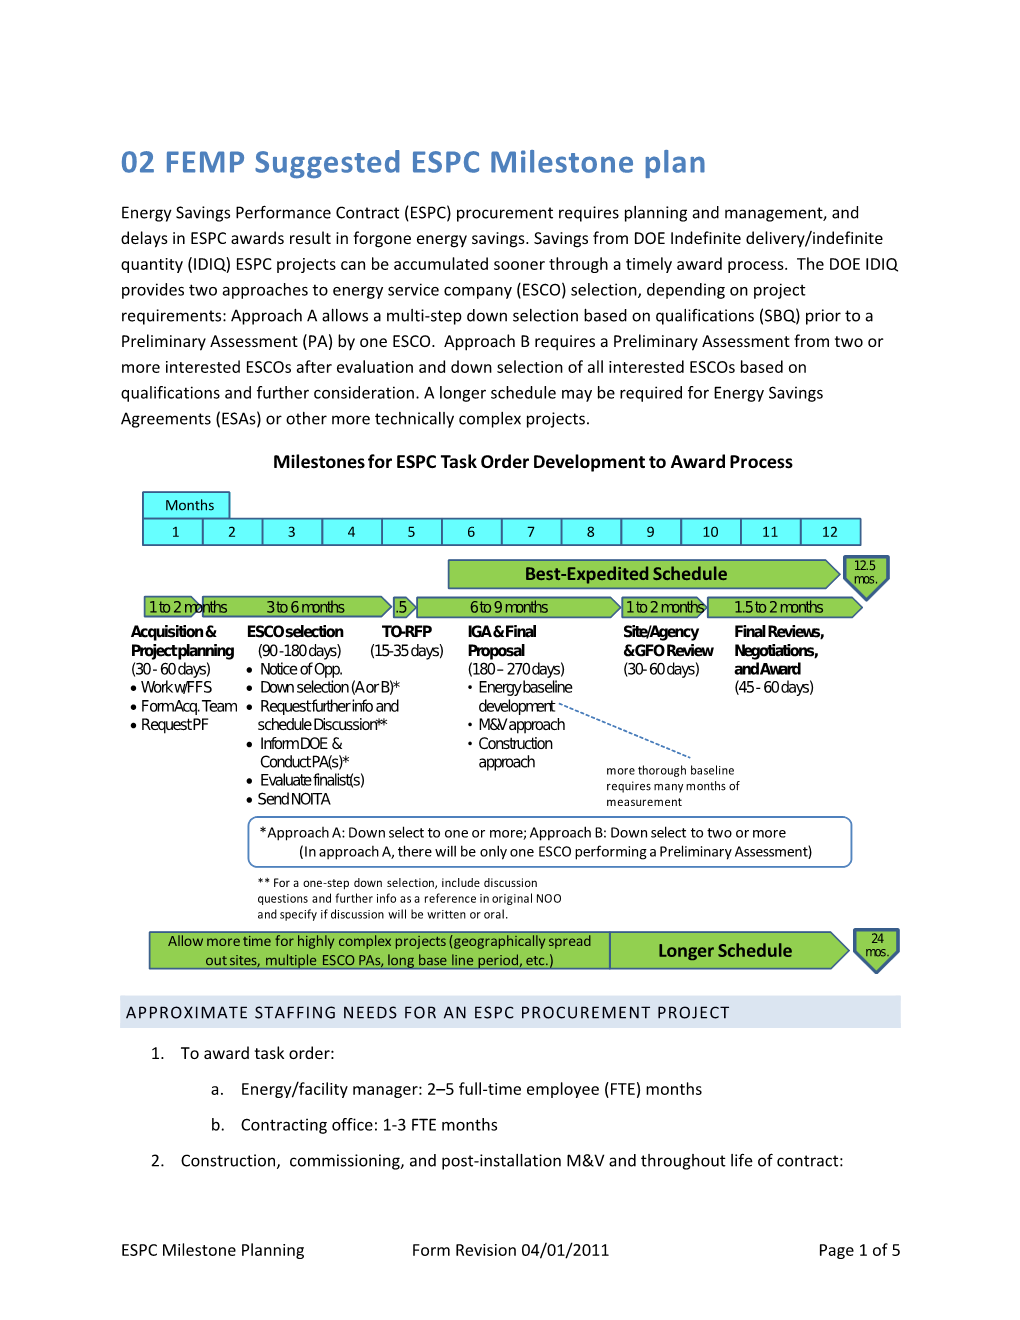 FEMP Suggested Milestone Plan